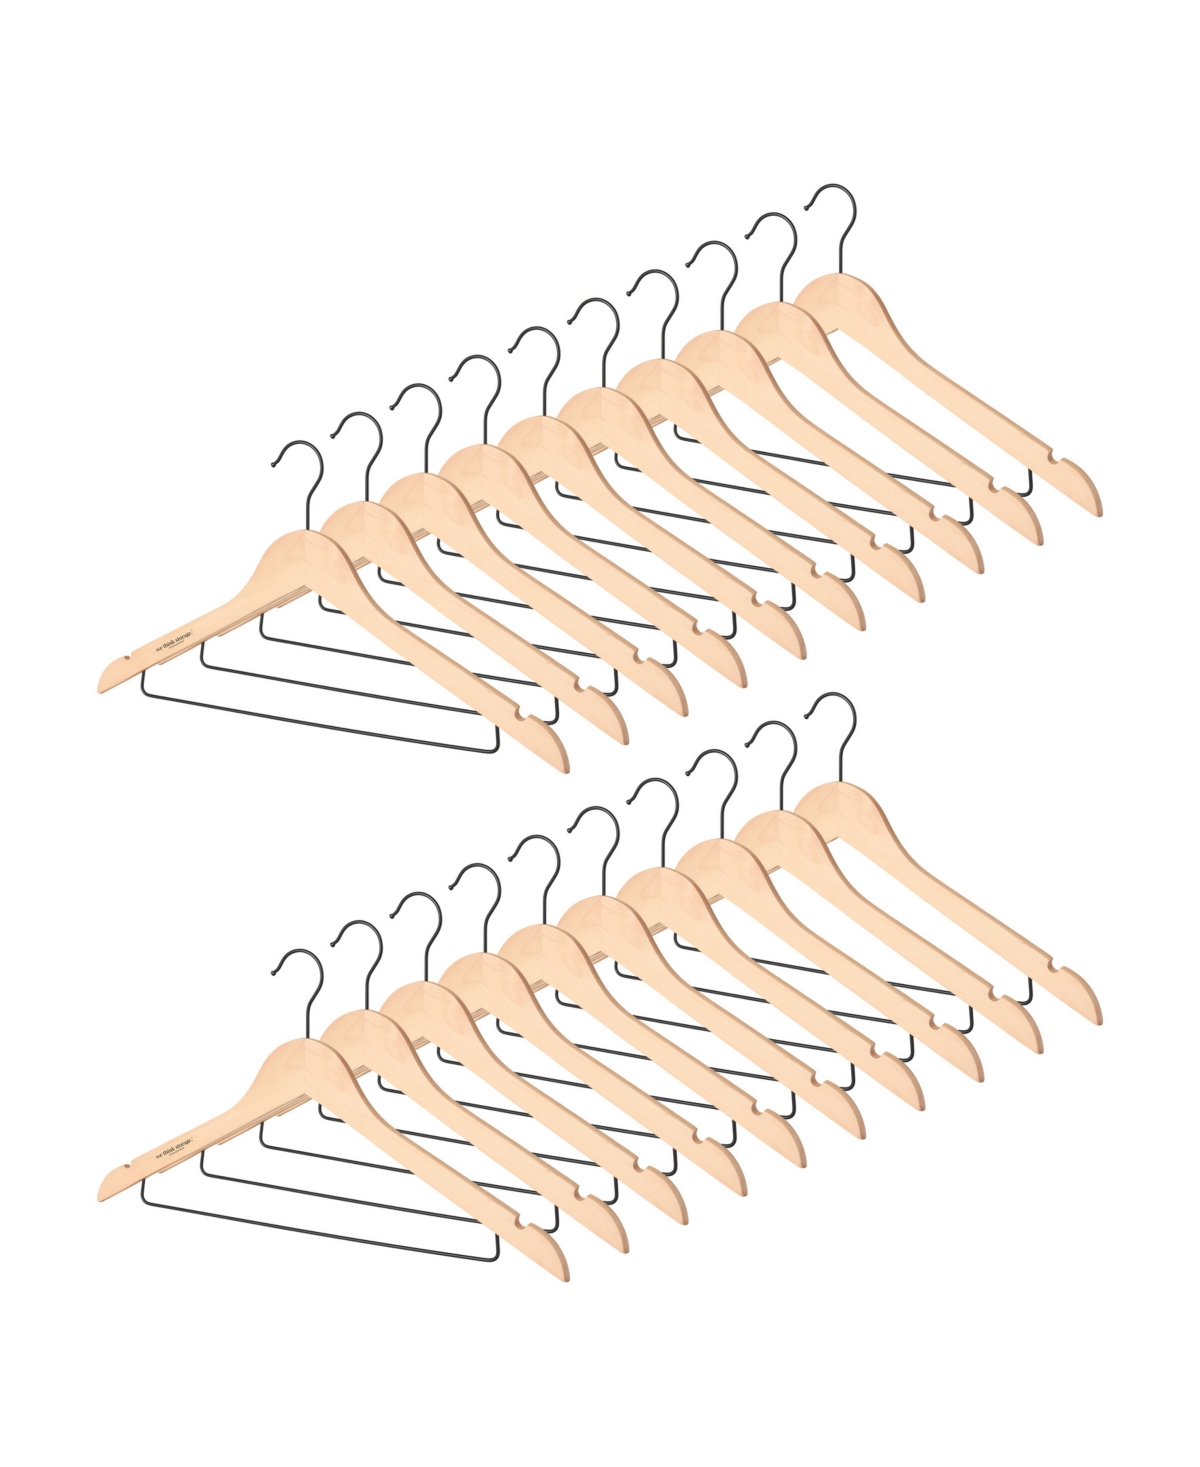 Wethinkstorage Pack Of 20 Slim Wood Hangers With Lower Bar In Natural